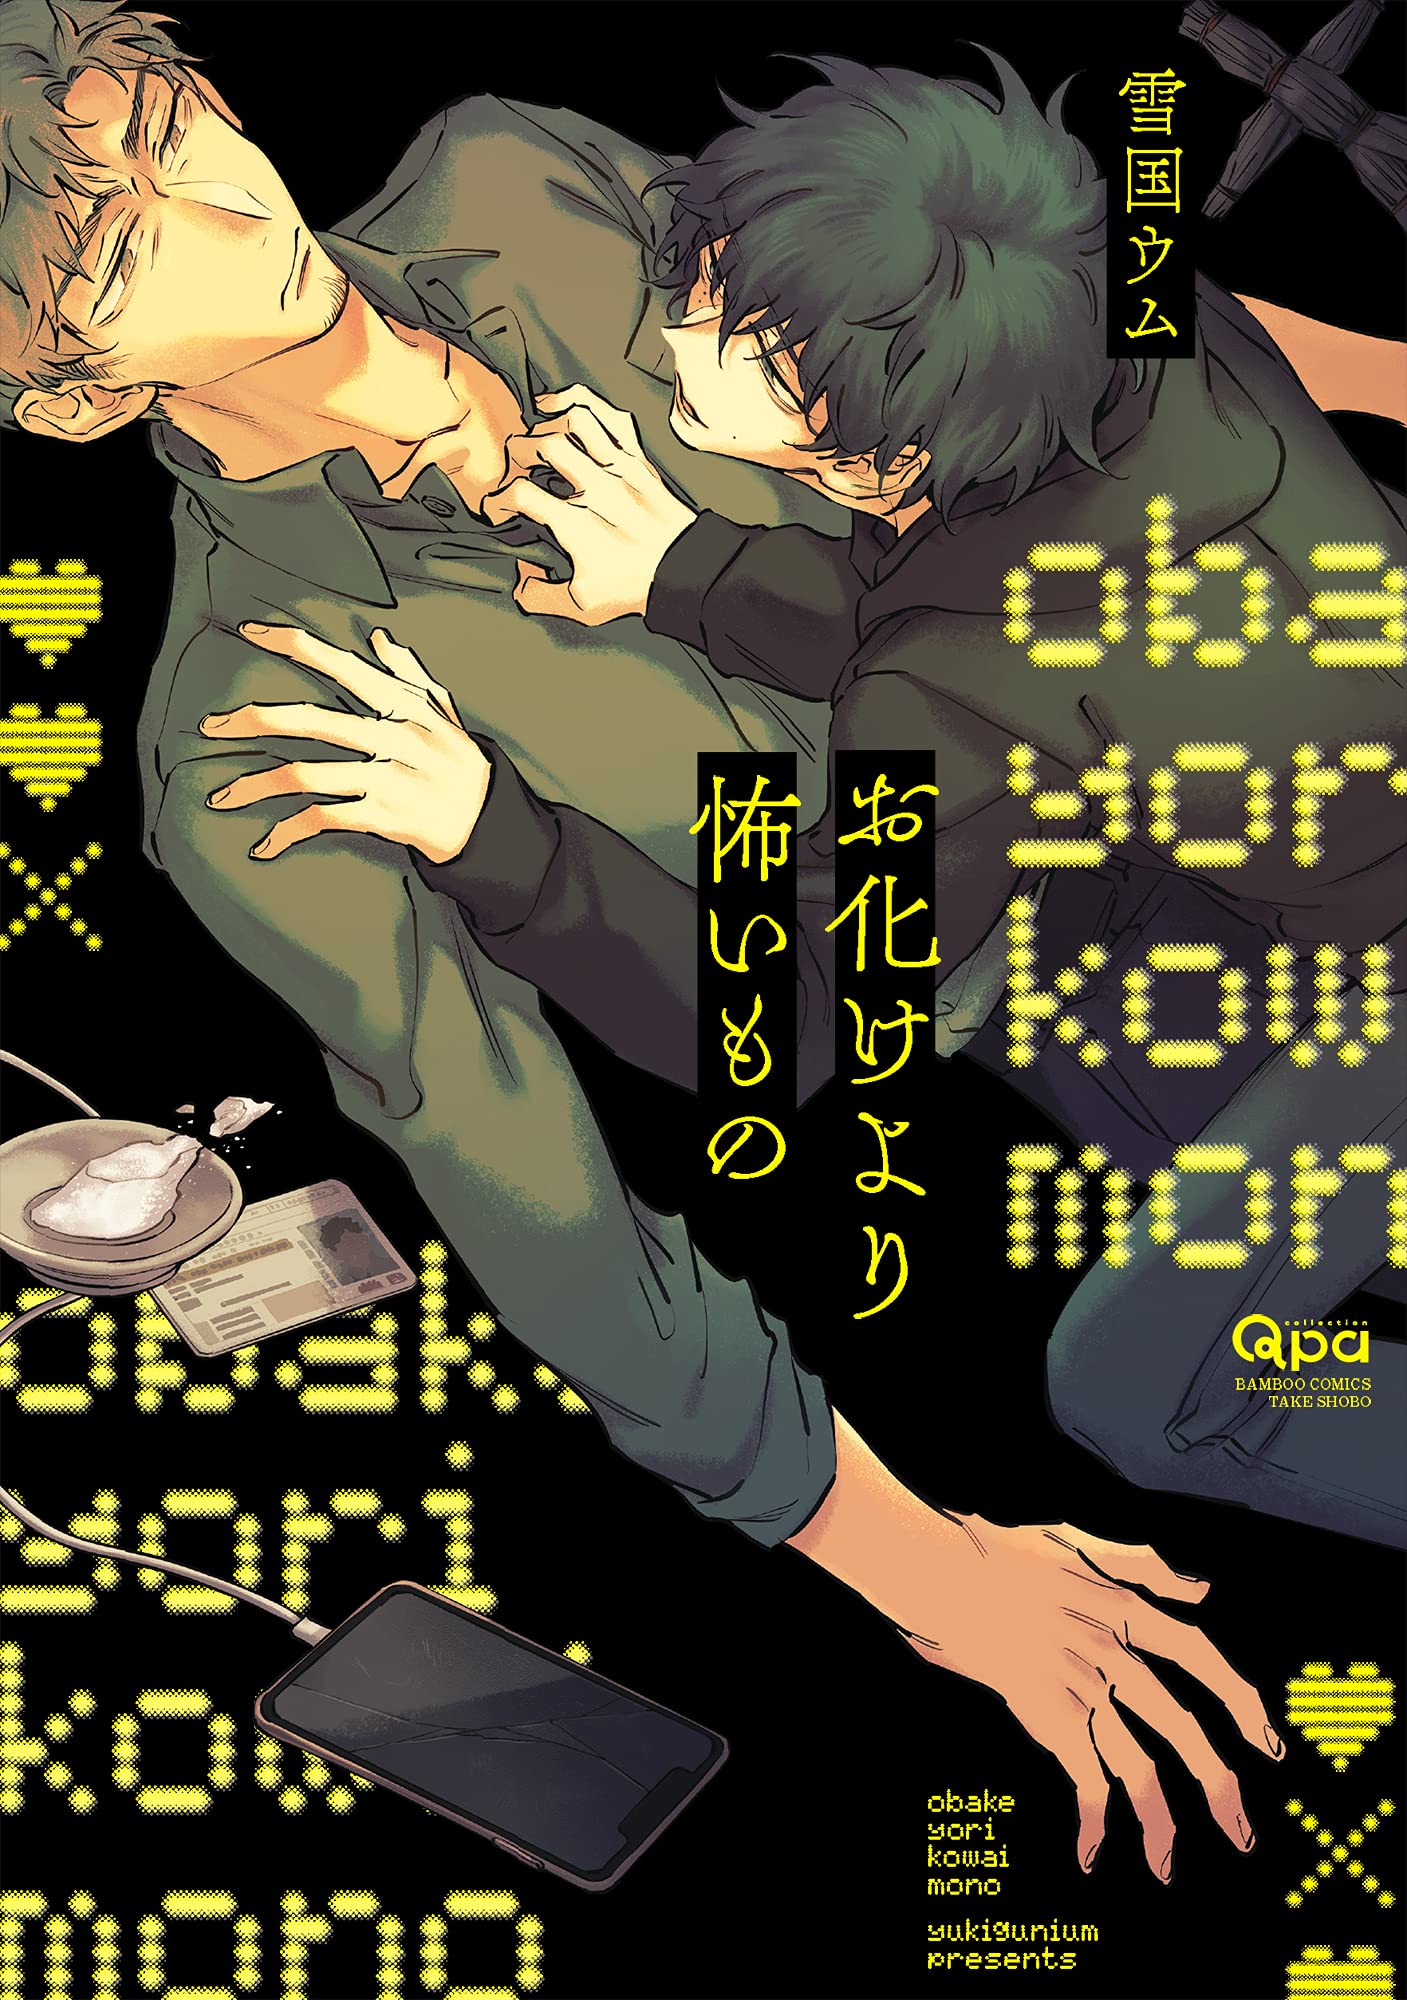 Boys Love (Yaoi) Comics - Obake yori Kowaimono (お化けより怖いもの (バンブー・コミックス Qpa collection)) / Yukiguni Umu